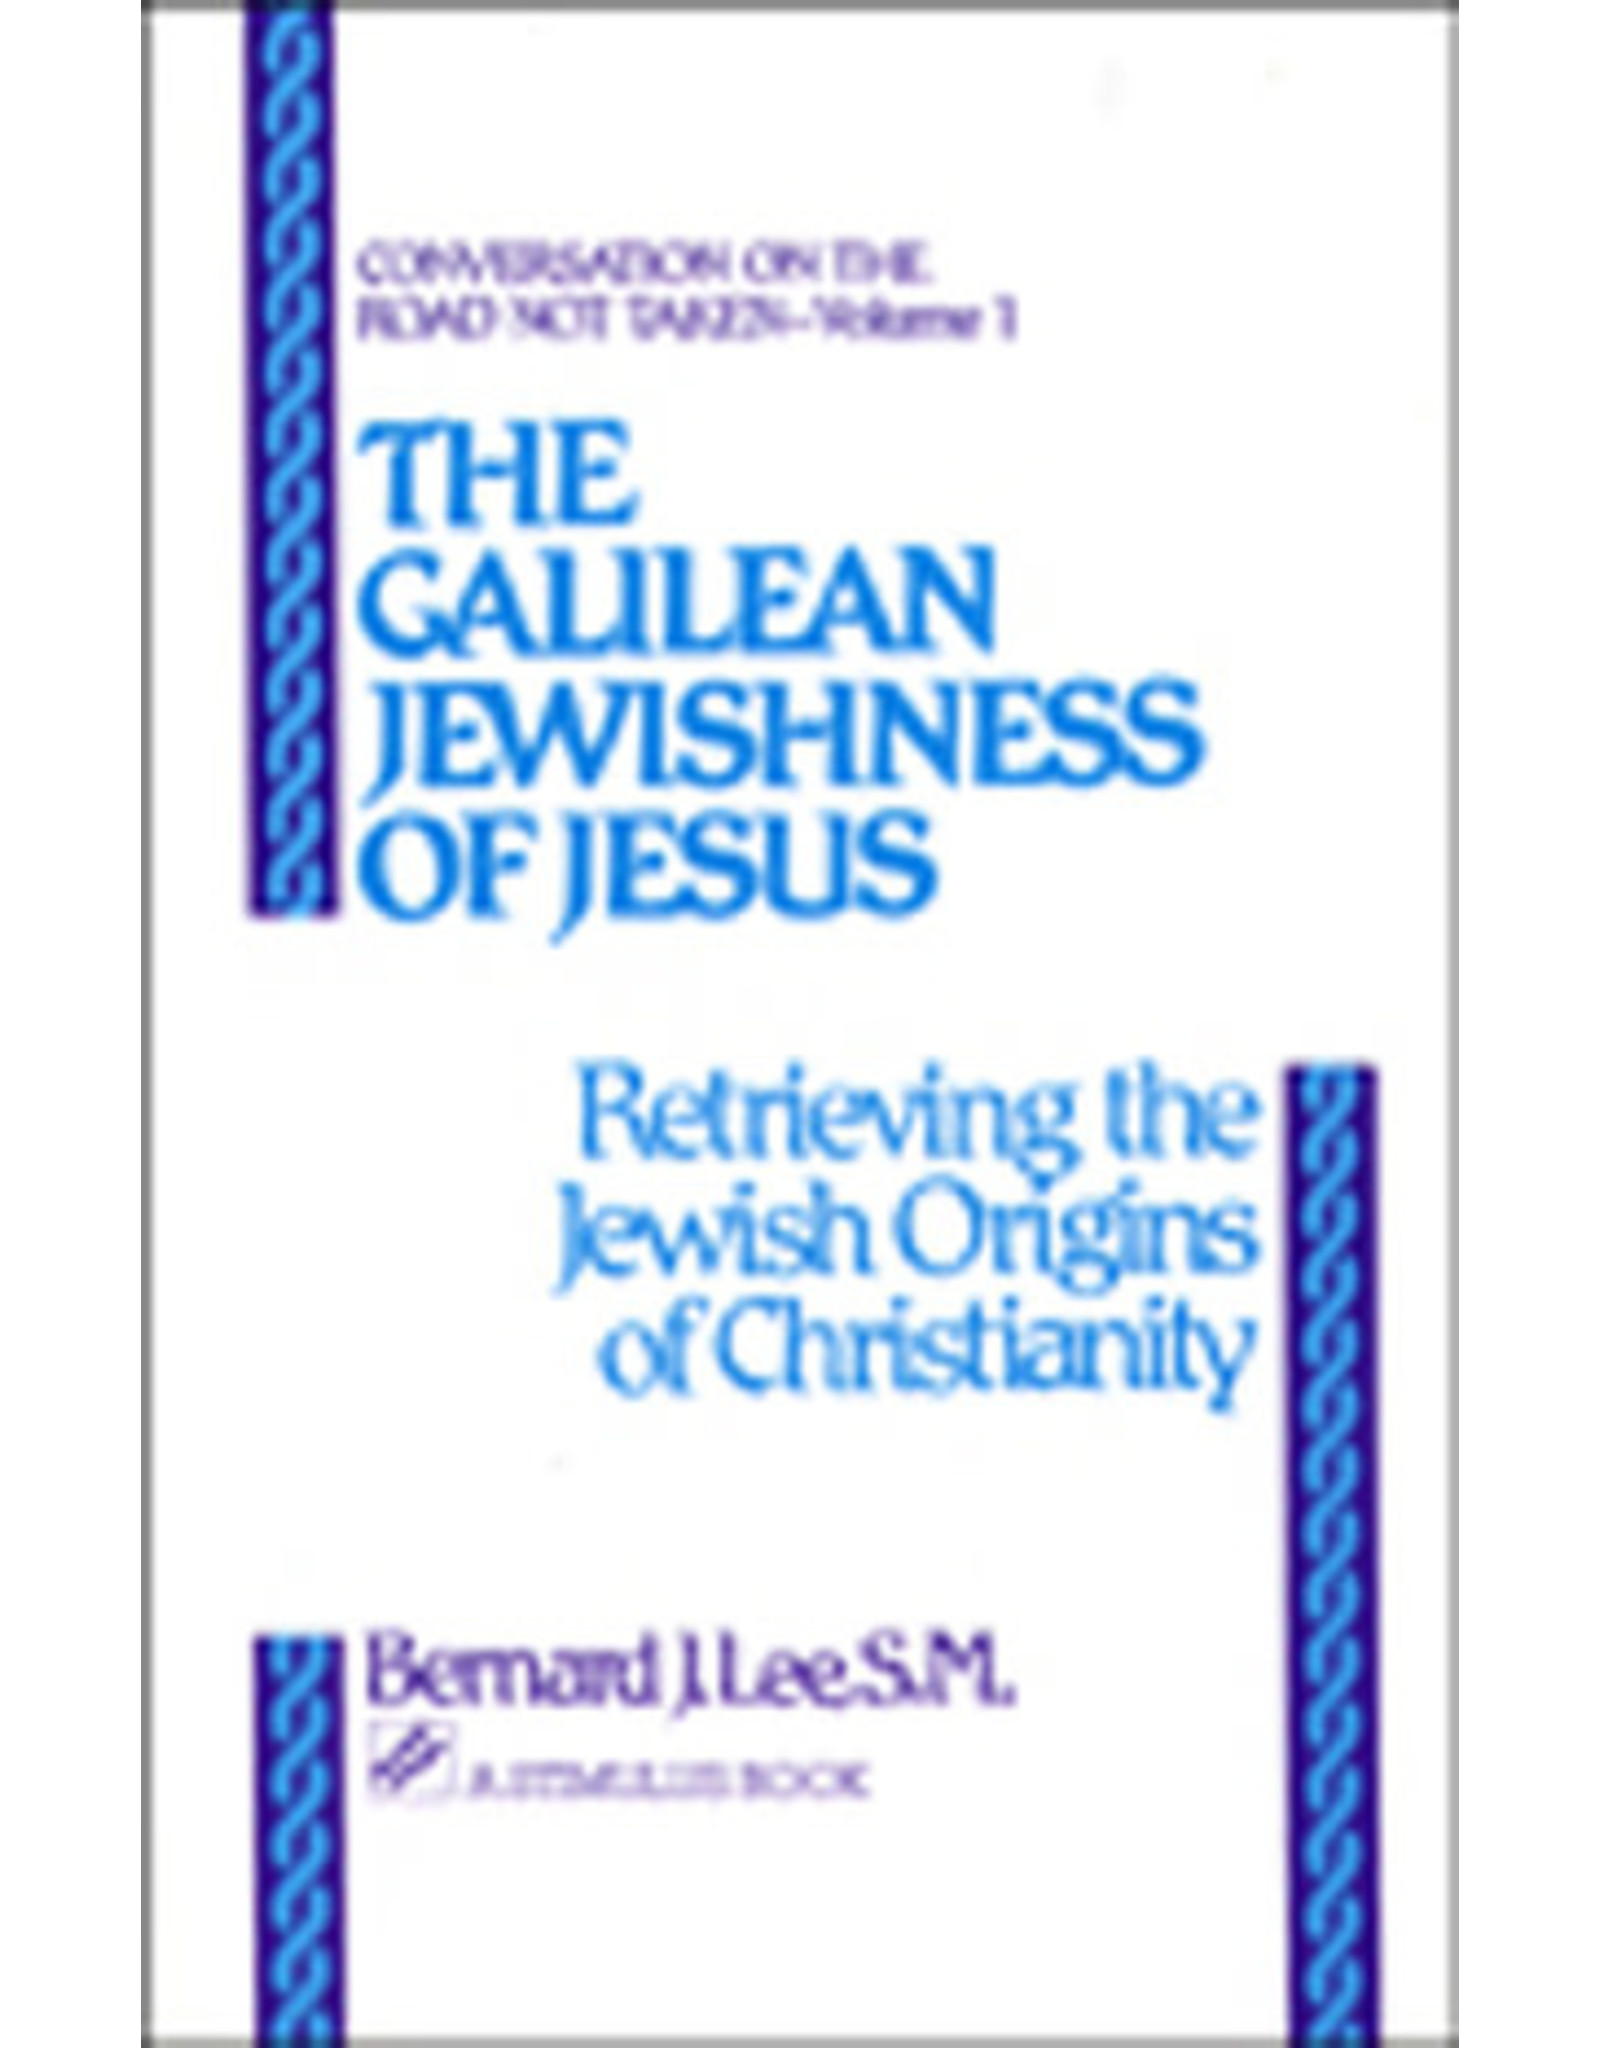 The Galilean Jewishness of Jesus